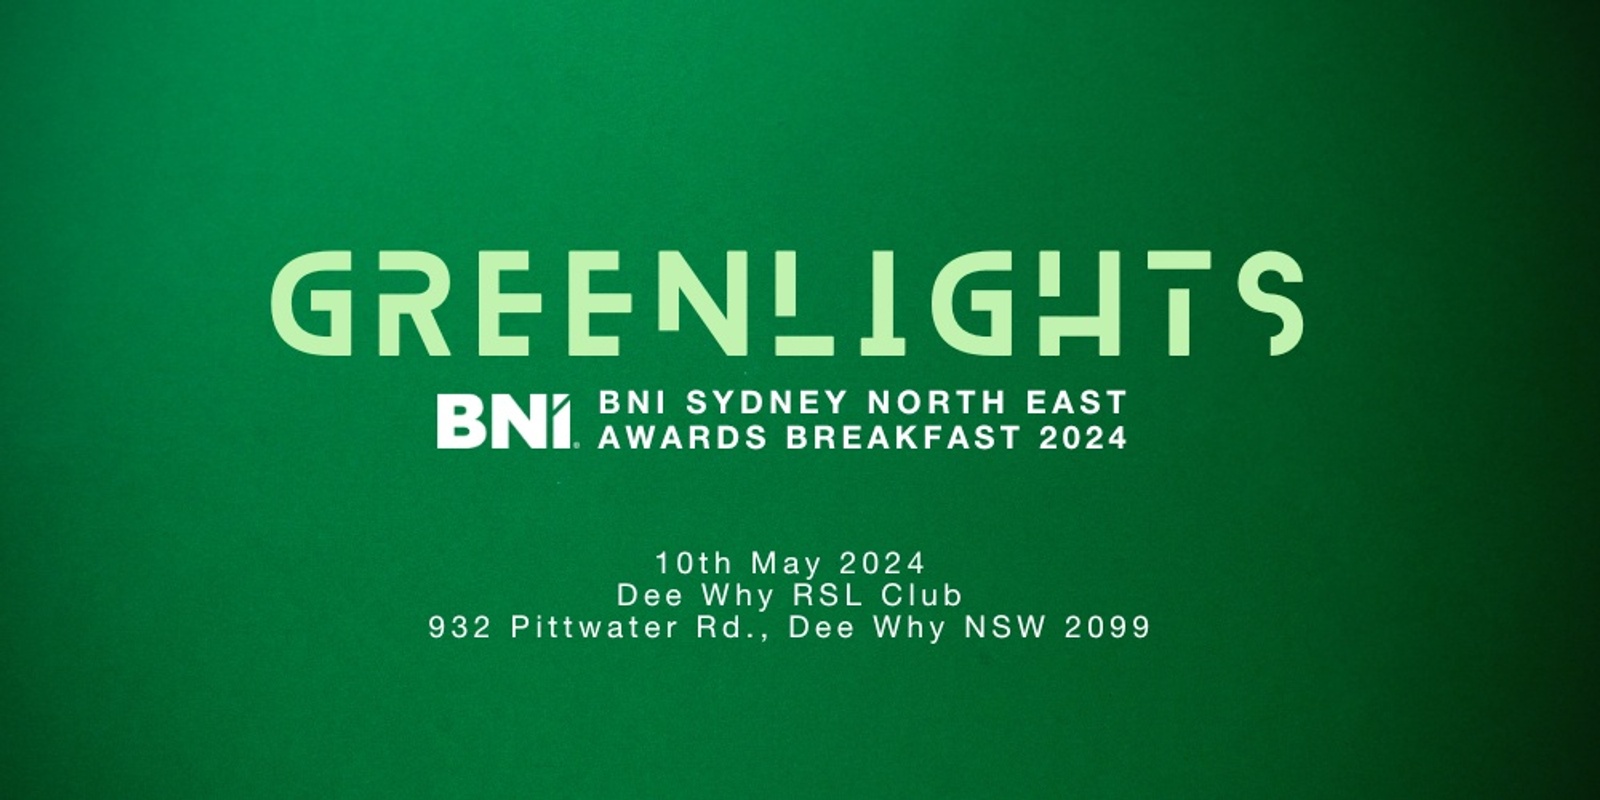 Banner image for BNI Sydney North East Awards Breakfast 2024